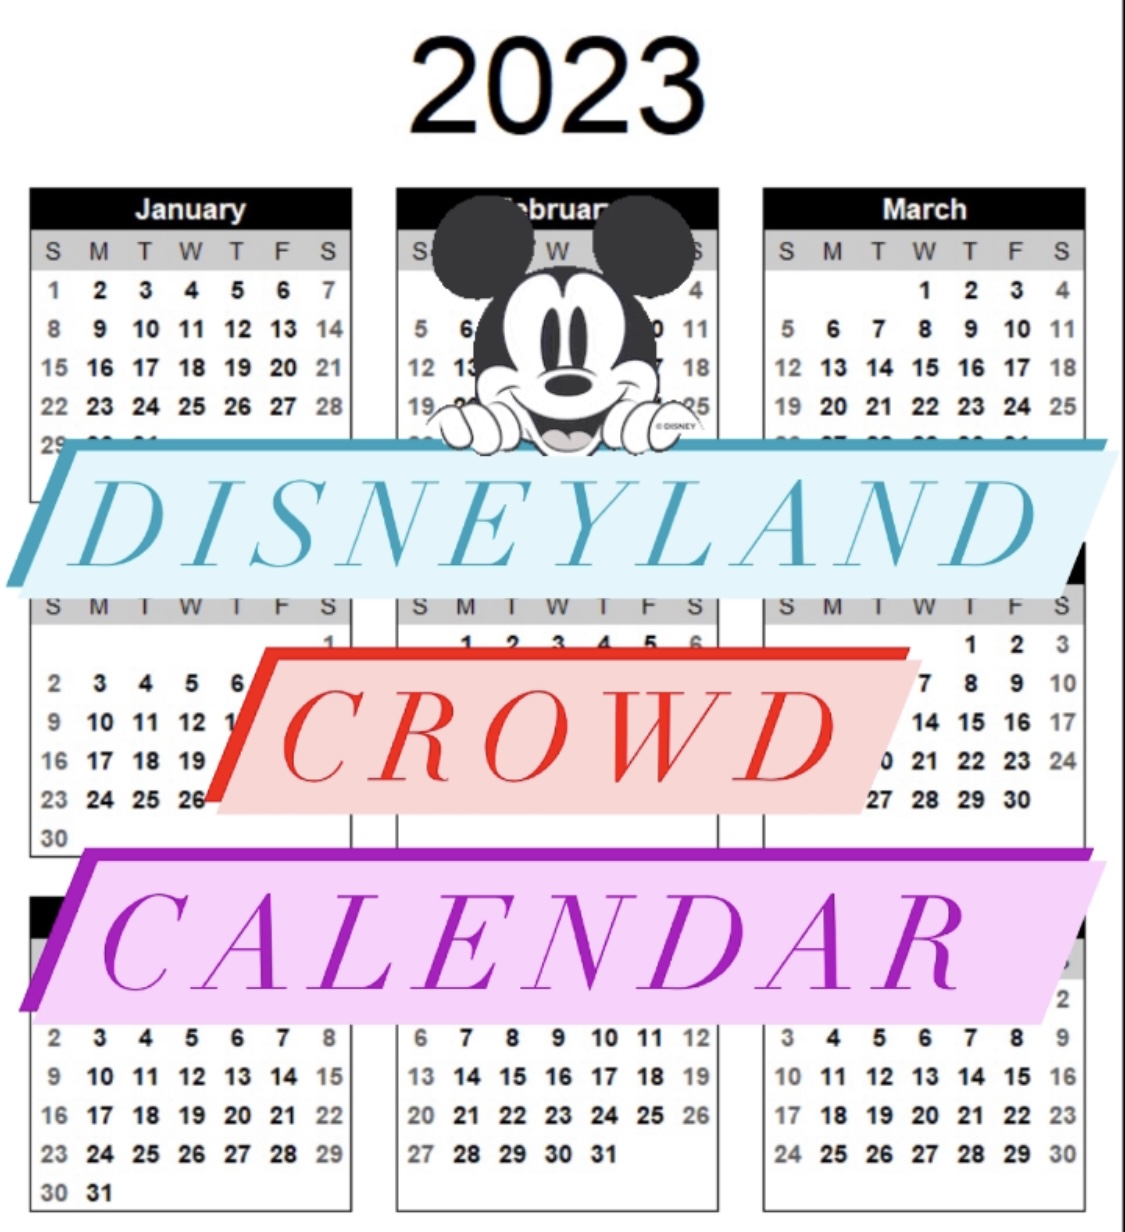 Disneyland 2023 Crowd Calendar - Disneyland Resort Tips And More